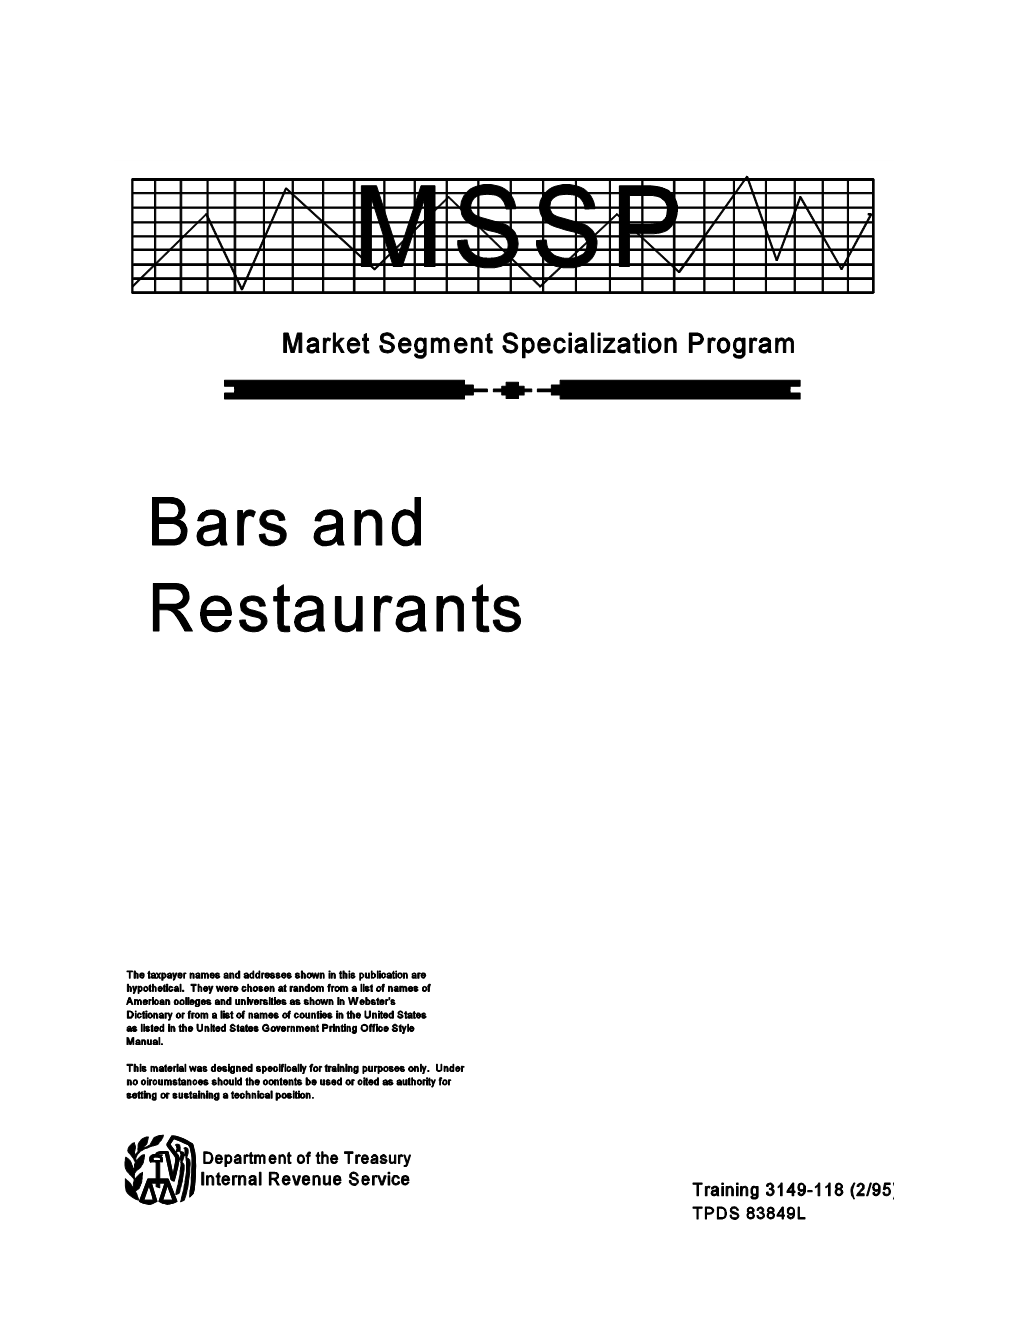 Bars and Restaurants